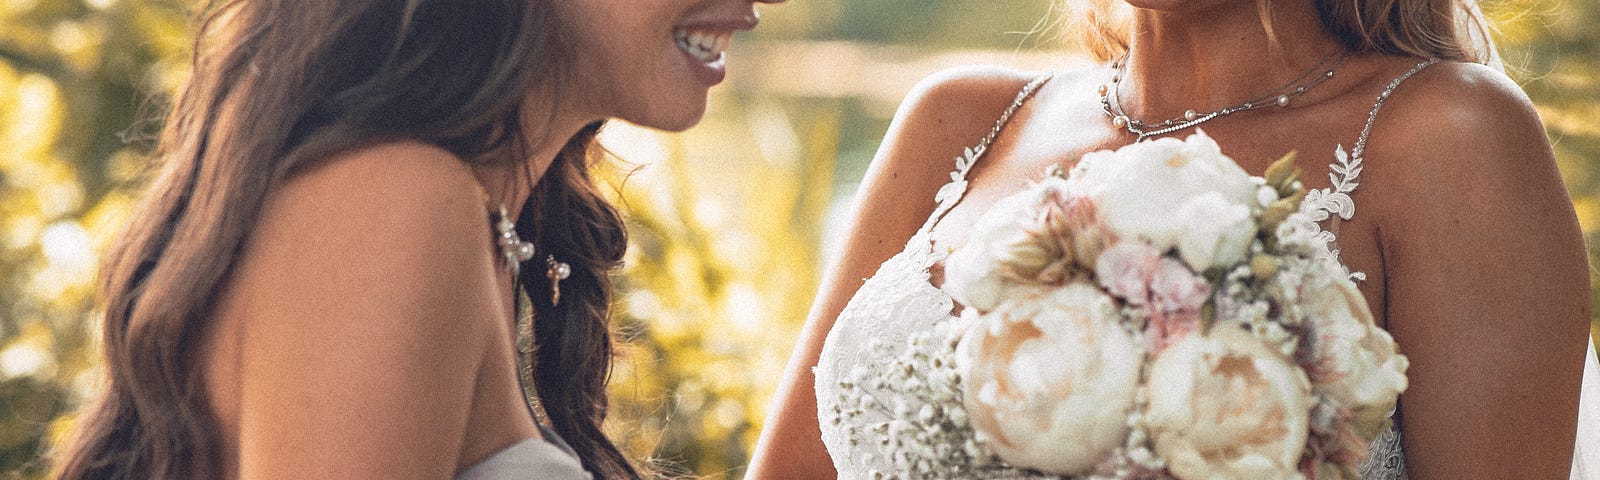 A bride and bridesmaid share a laugh